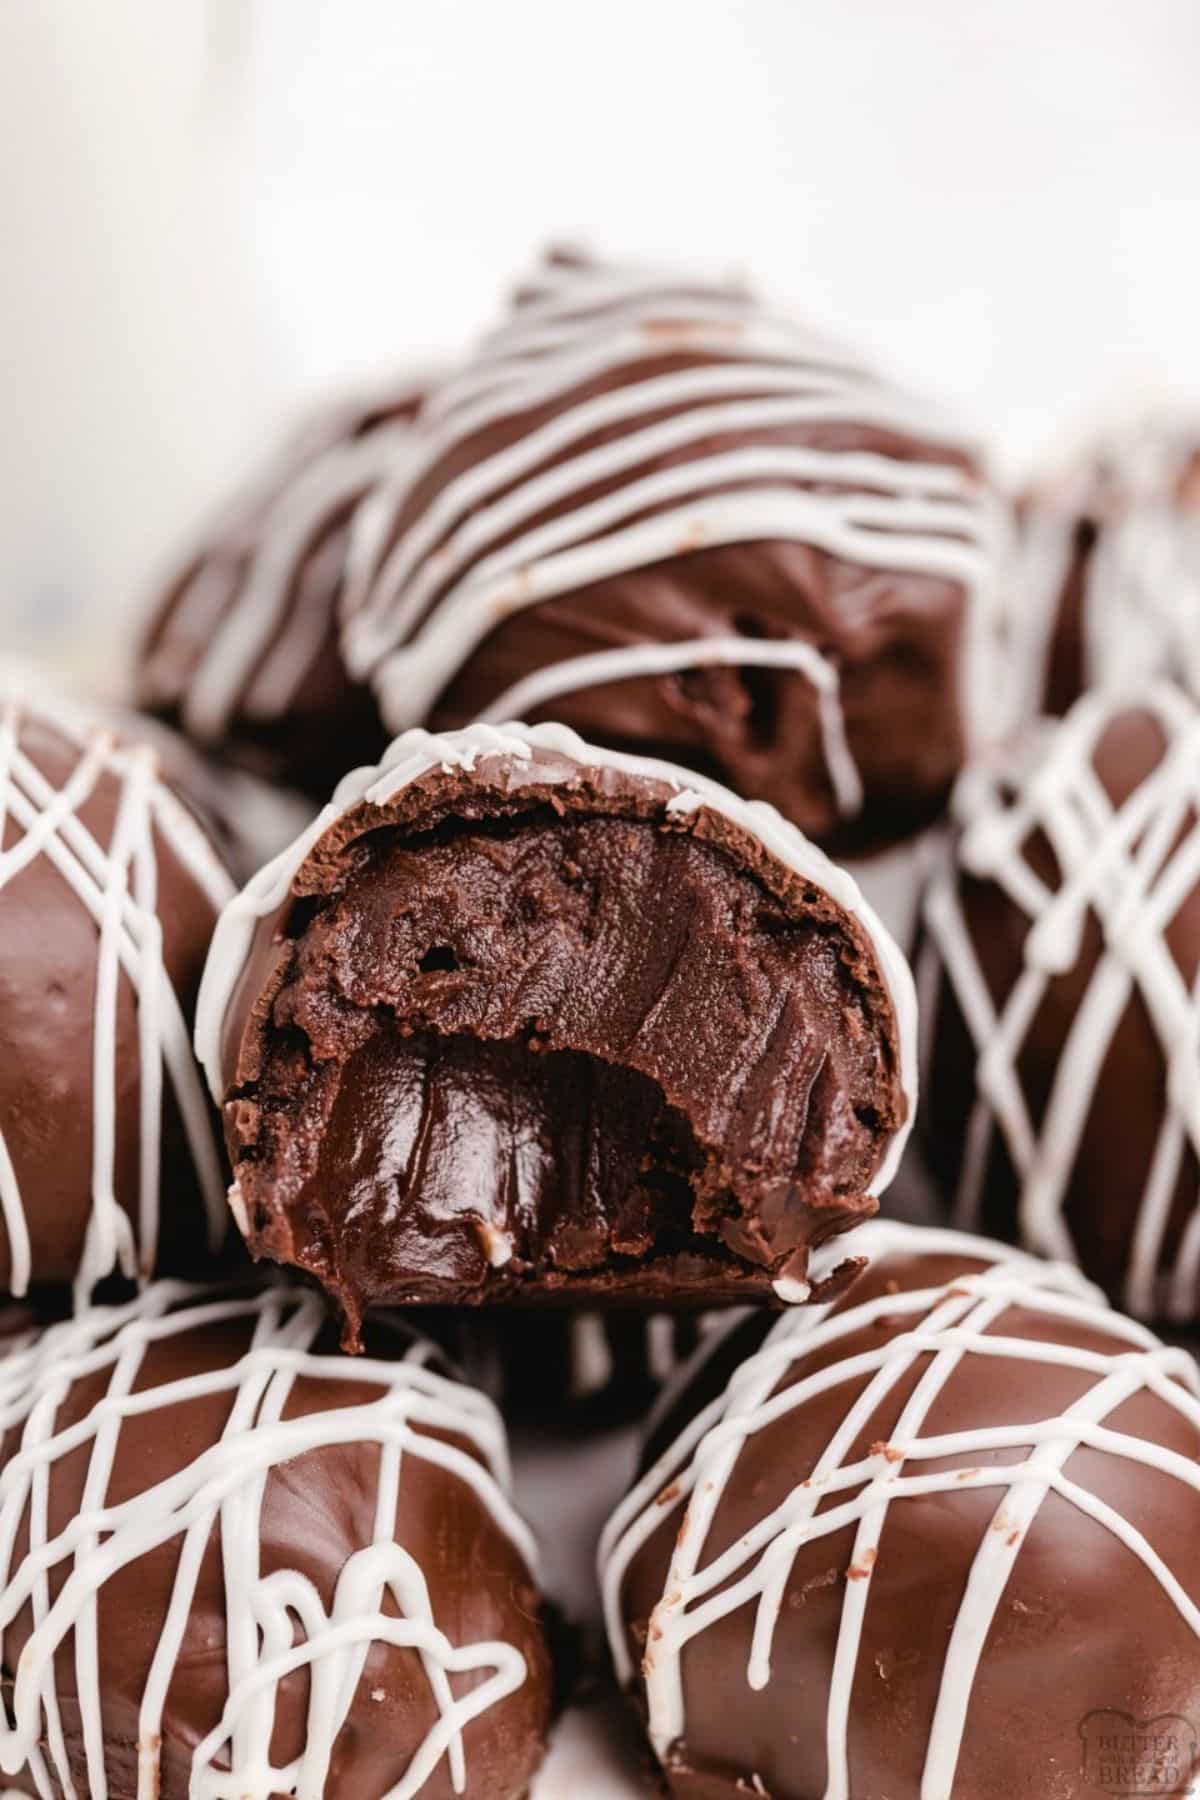 Mouth-watering dark chocolate truffles.